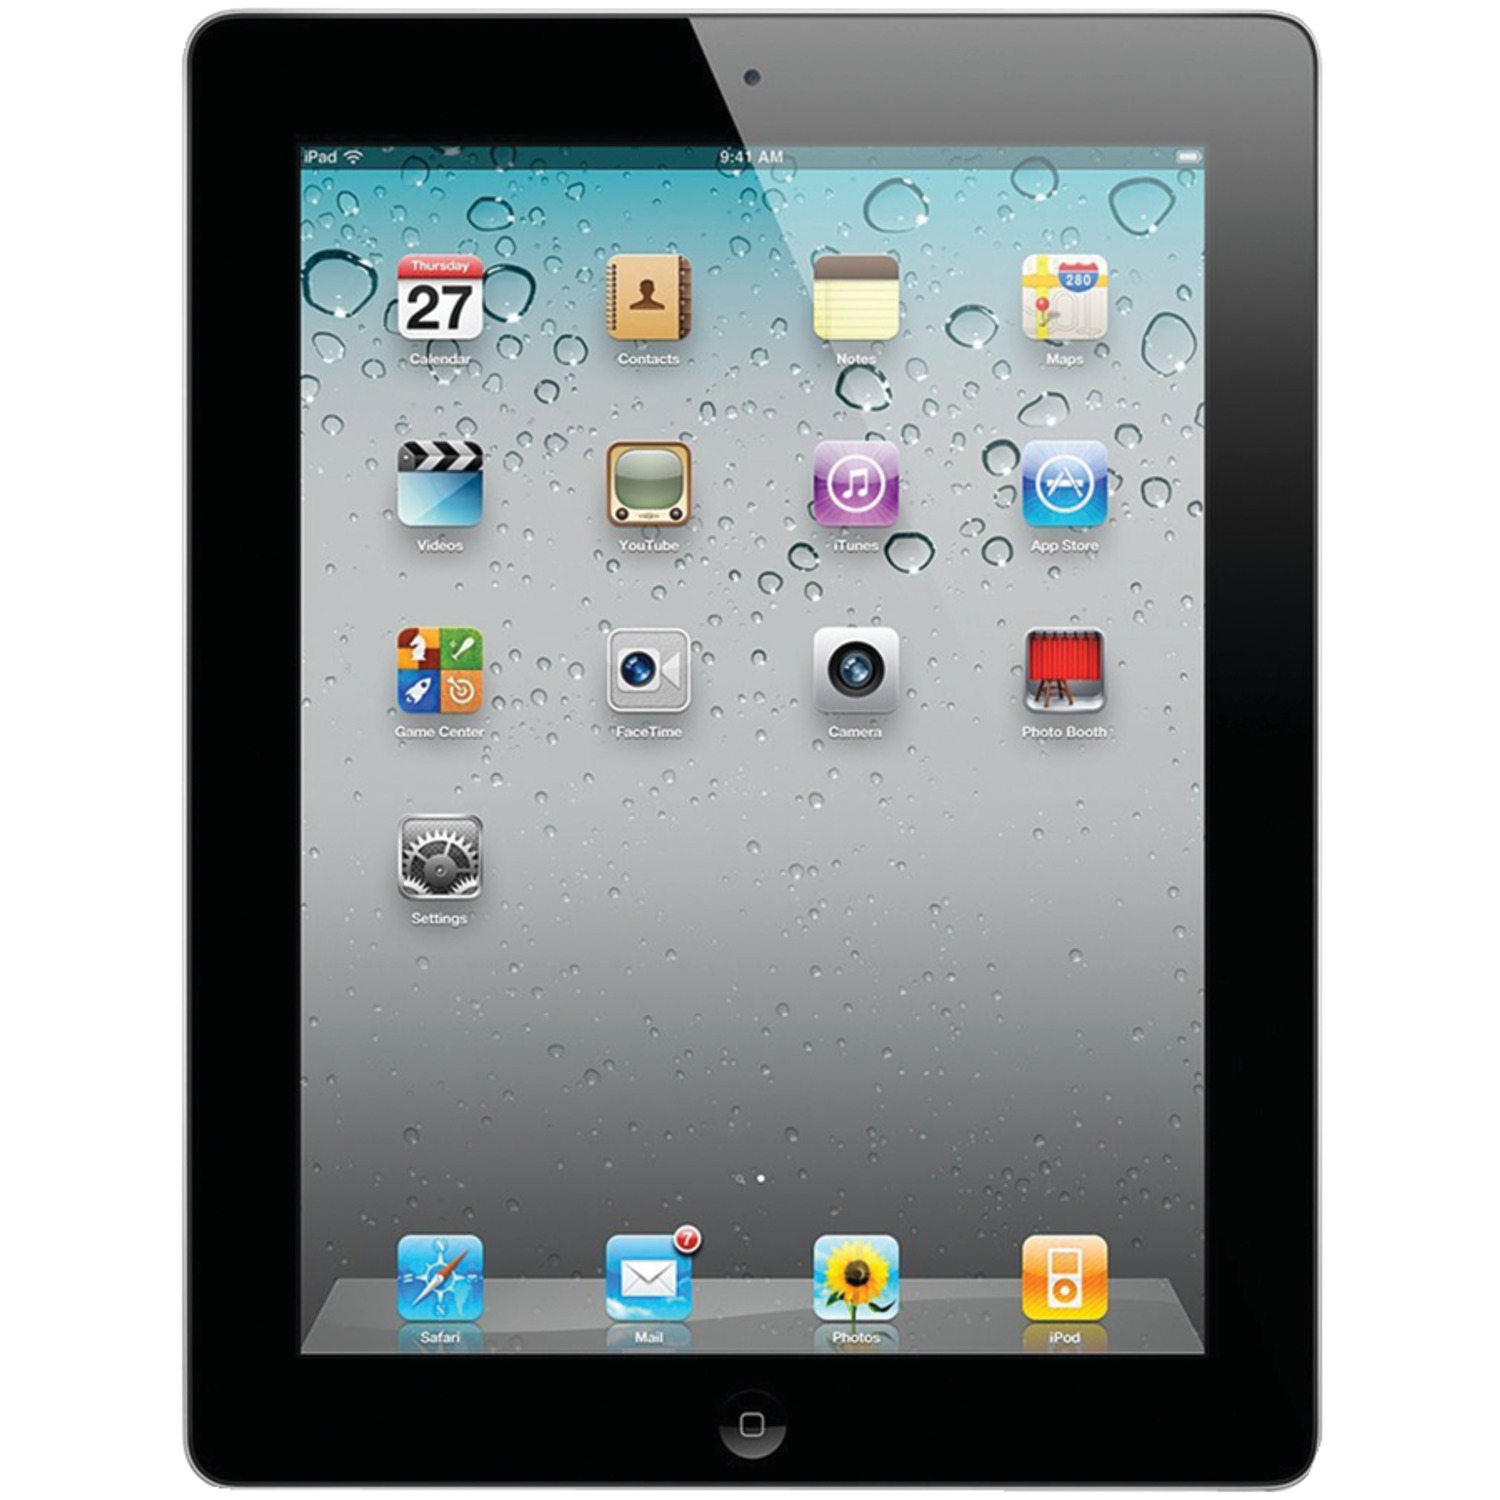 Restored MP2 - Apple iPad 2 with Wi-Fi 16GB - Black (2nd generation) MC769 (Refurbished) - image 1 of 4